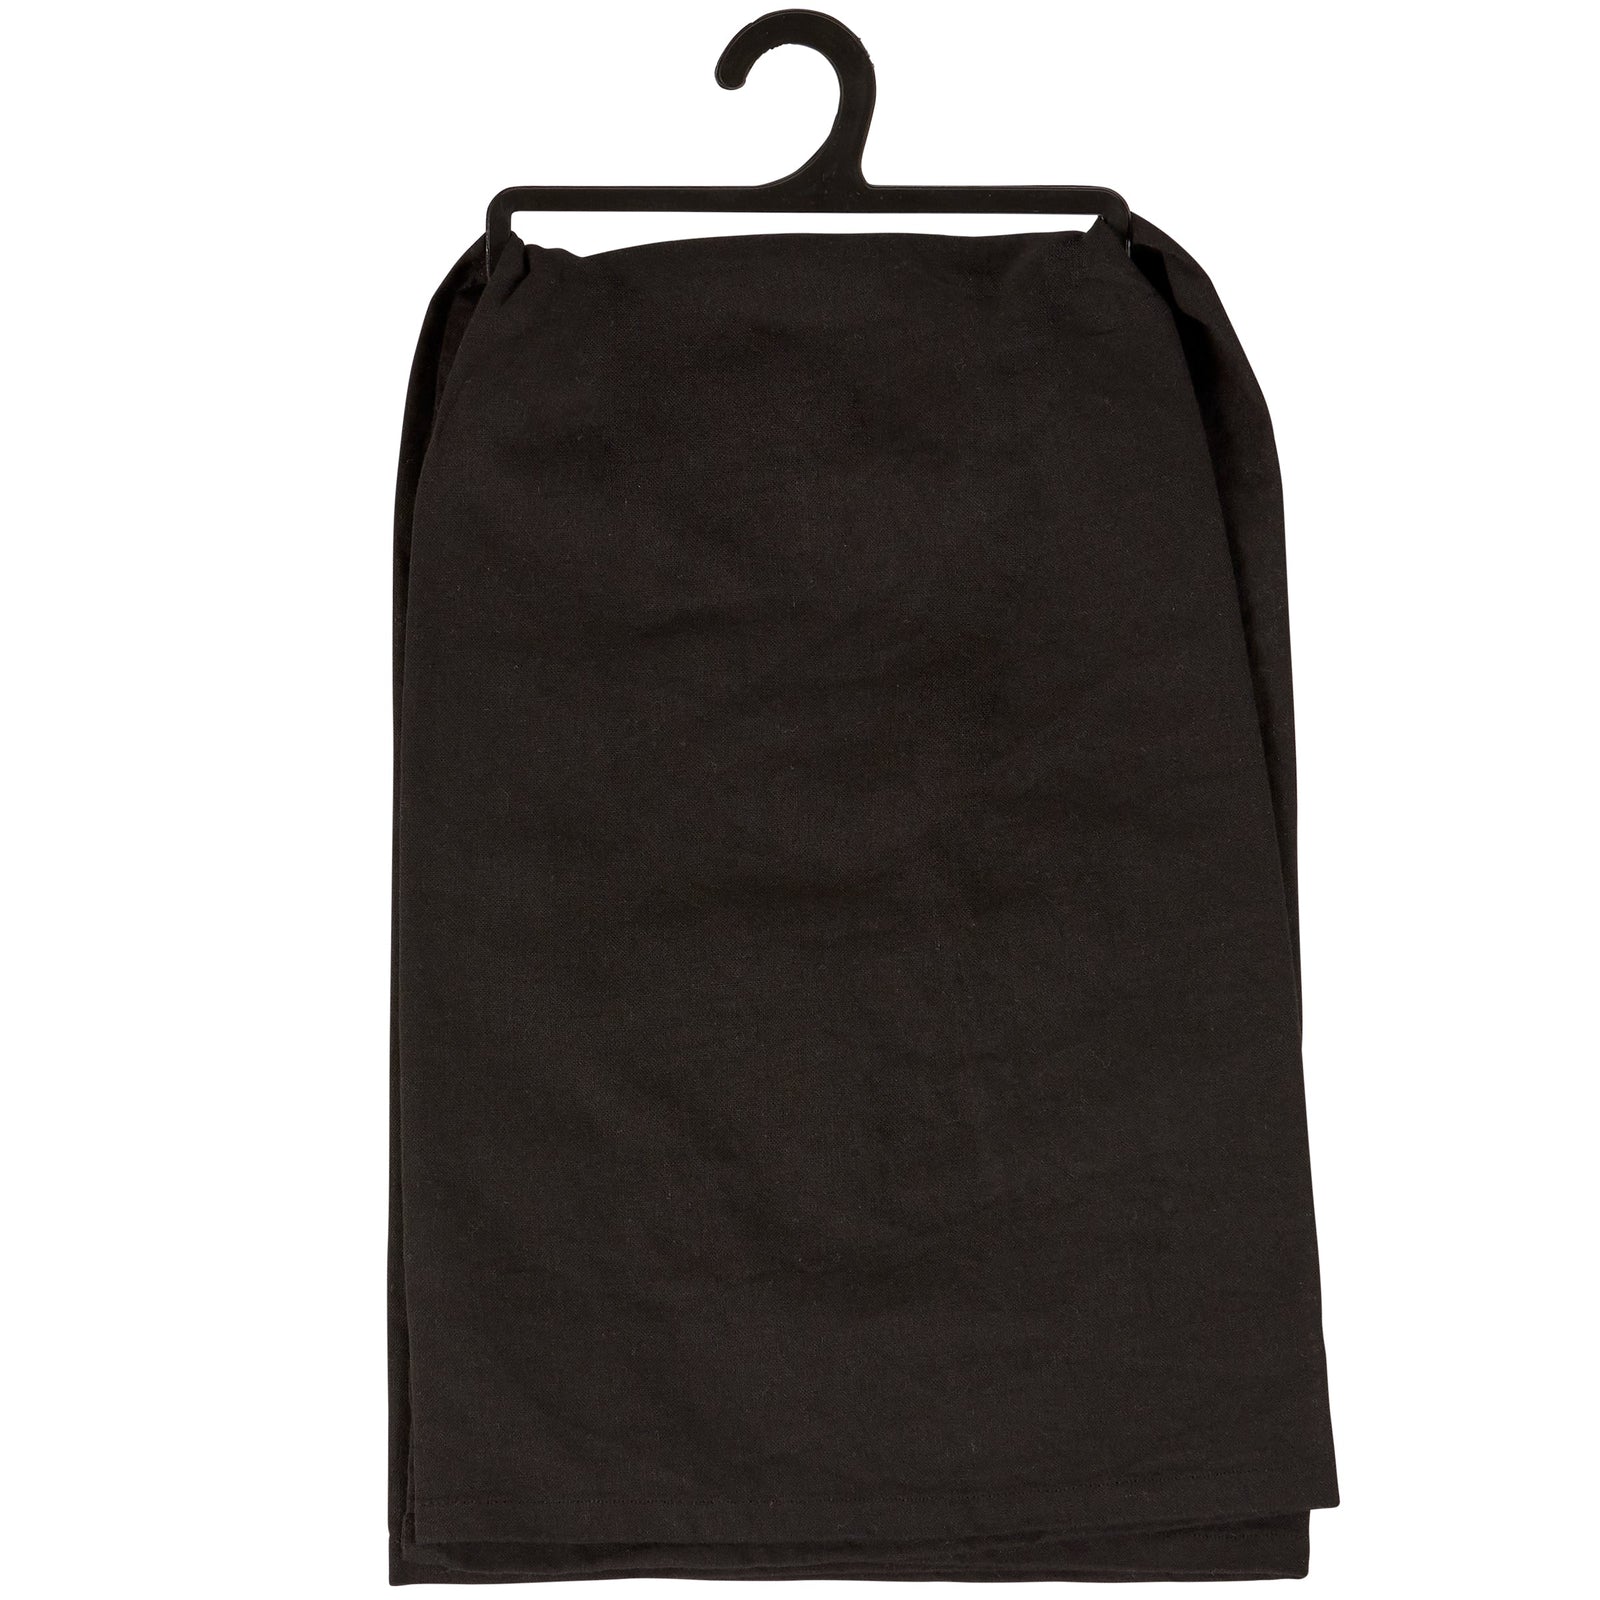 Nightmare Before Coffee Skeleton Kitchen Towel | Black Cotton Halloween Themed Tea Dish Cloth | 28" x 28"